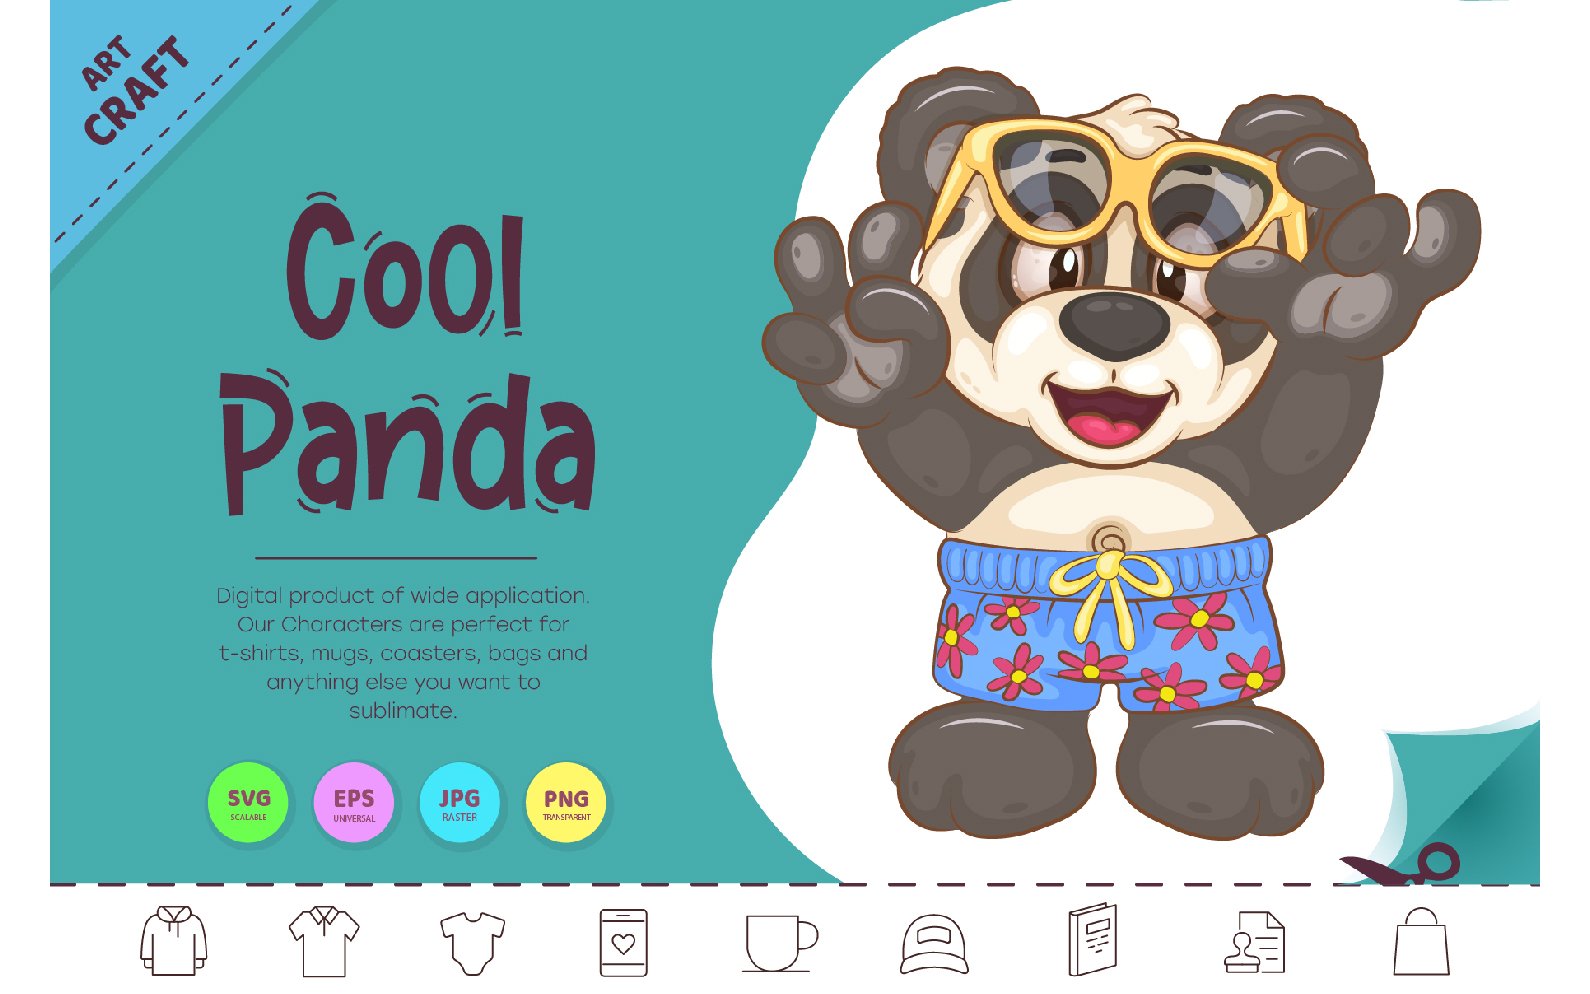 Template #345999 Cool Panda Webdesign Template - Logo template Preview